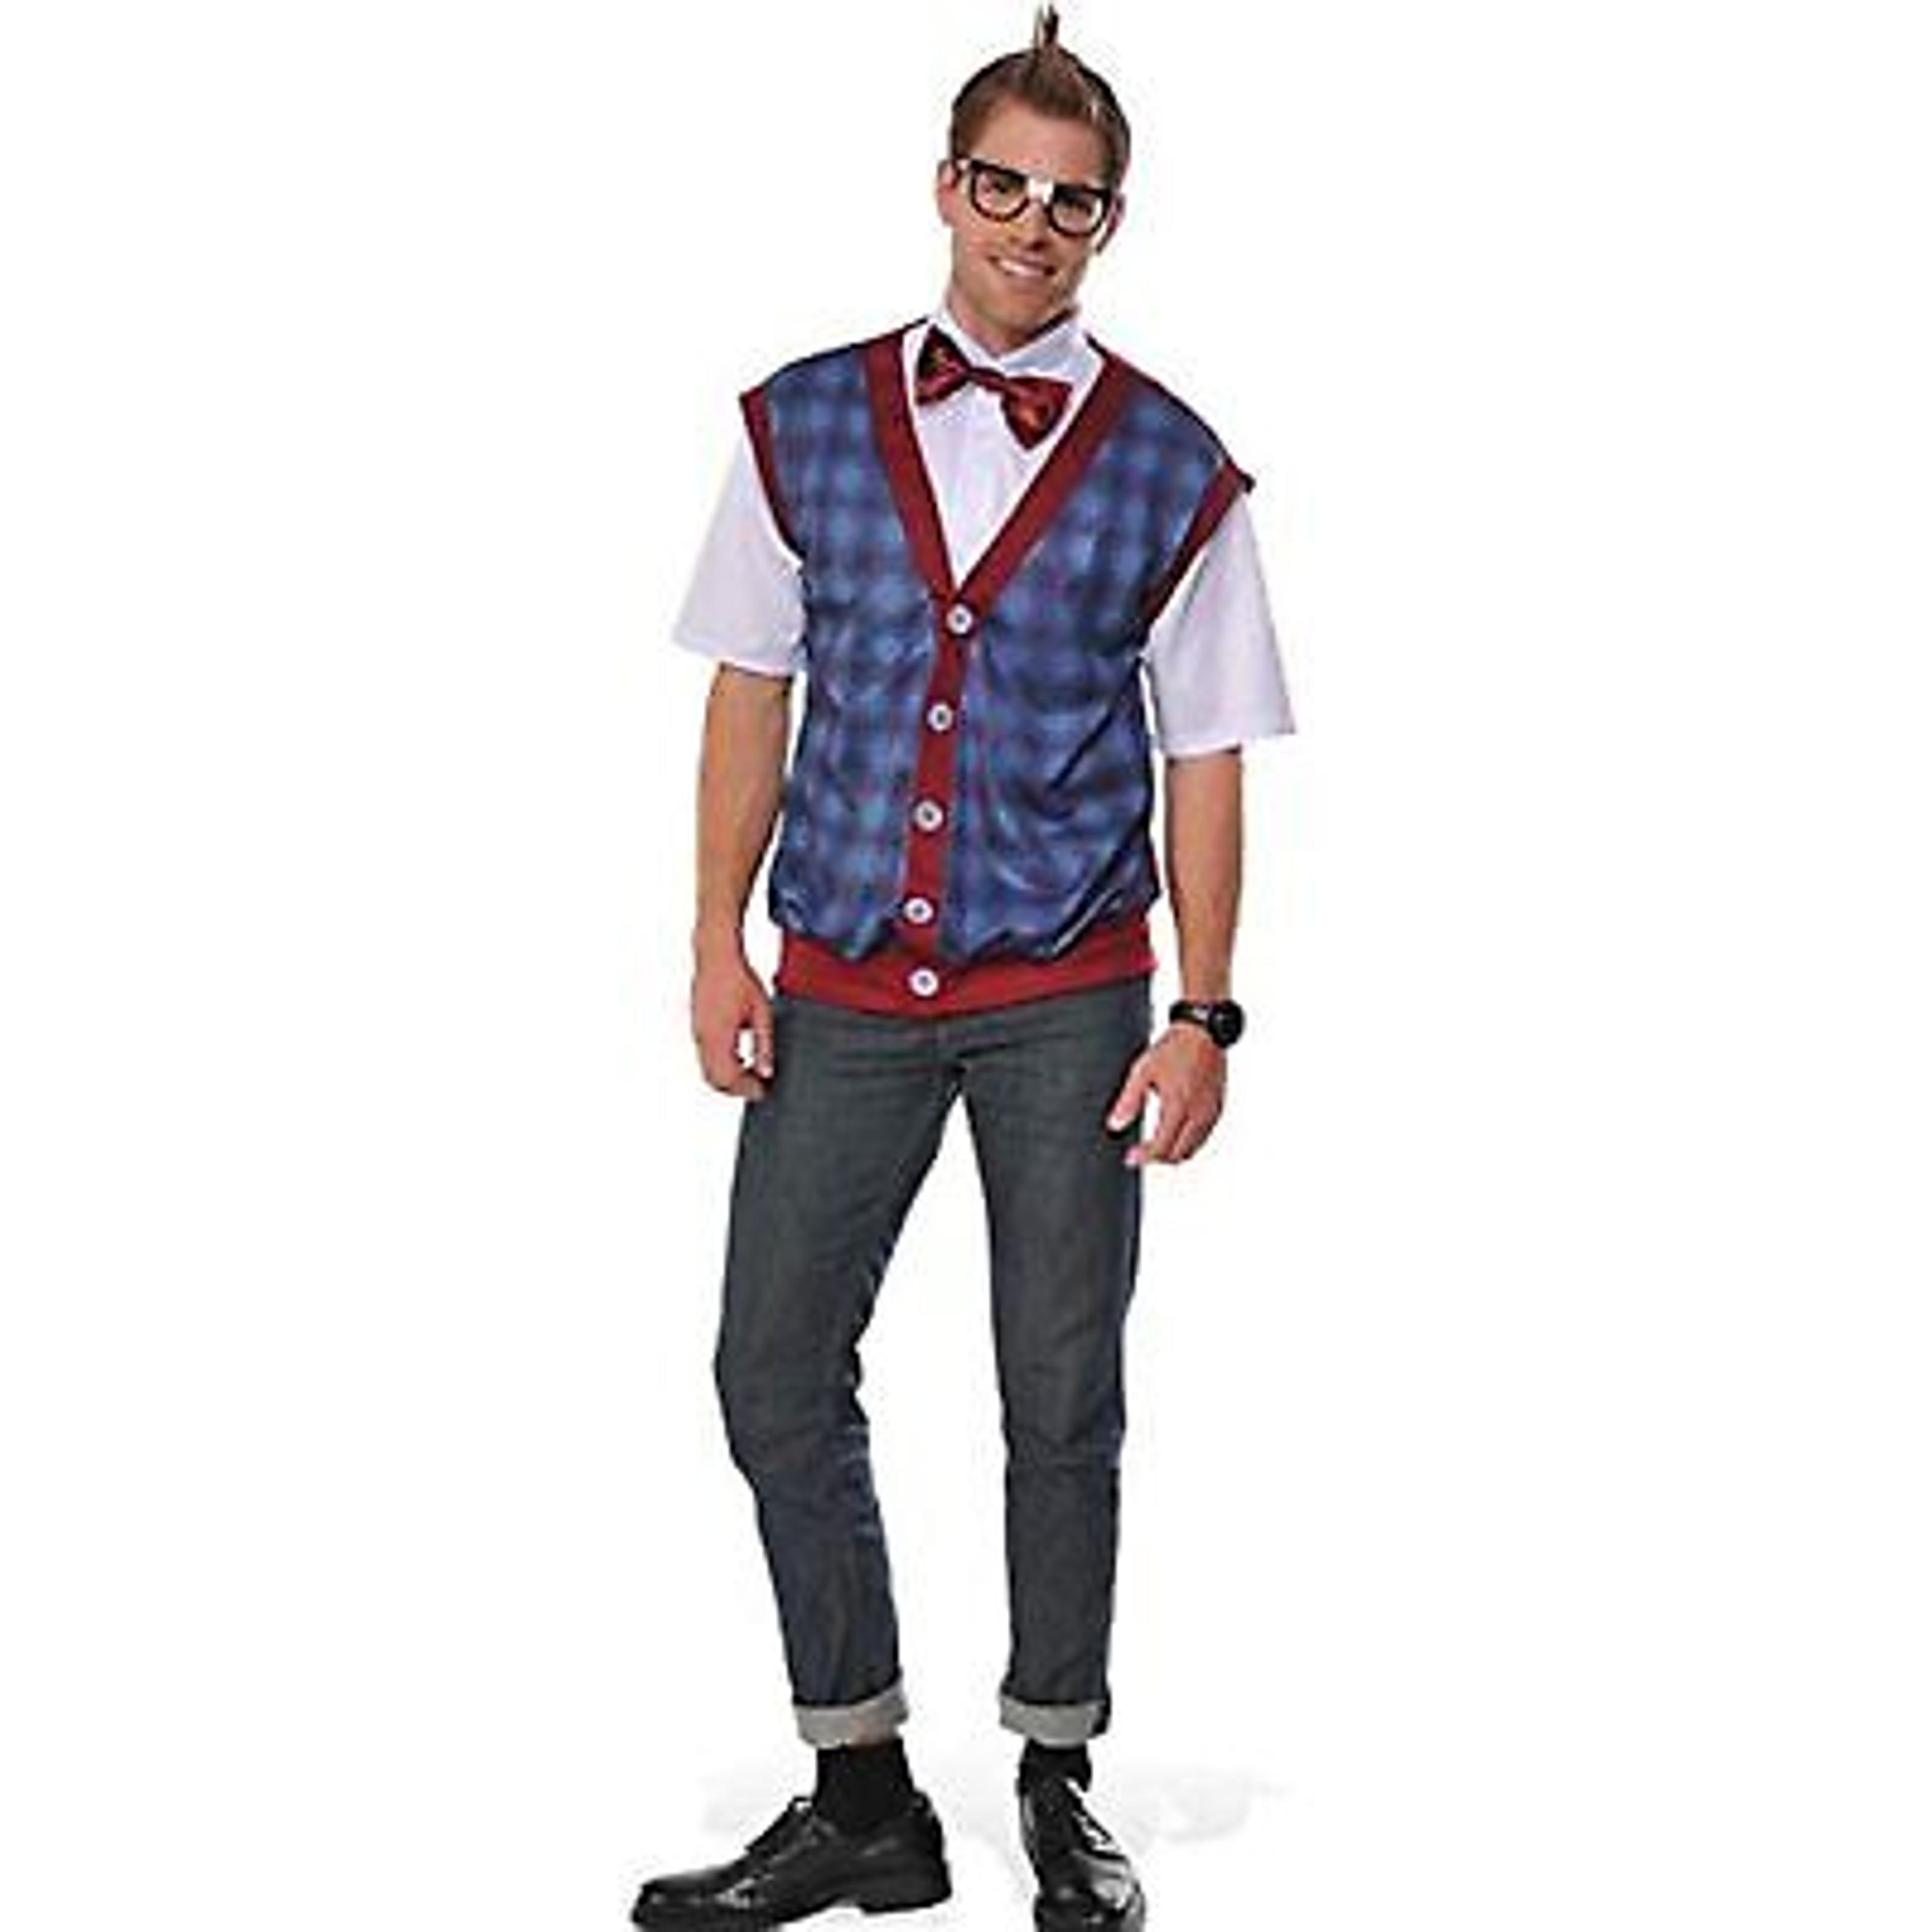 Rubie's Men's Nerd Male Costume, As Shown, Standard Fits up to Jacket Size 44 883028231010 | eBay